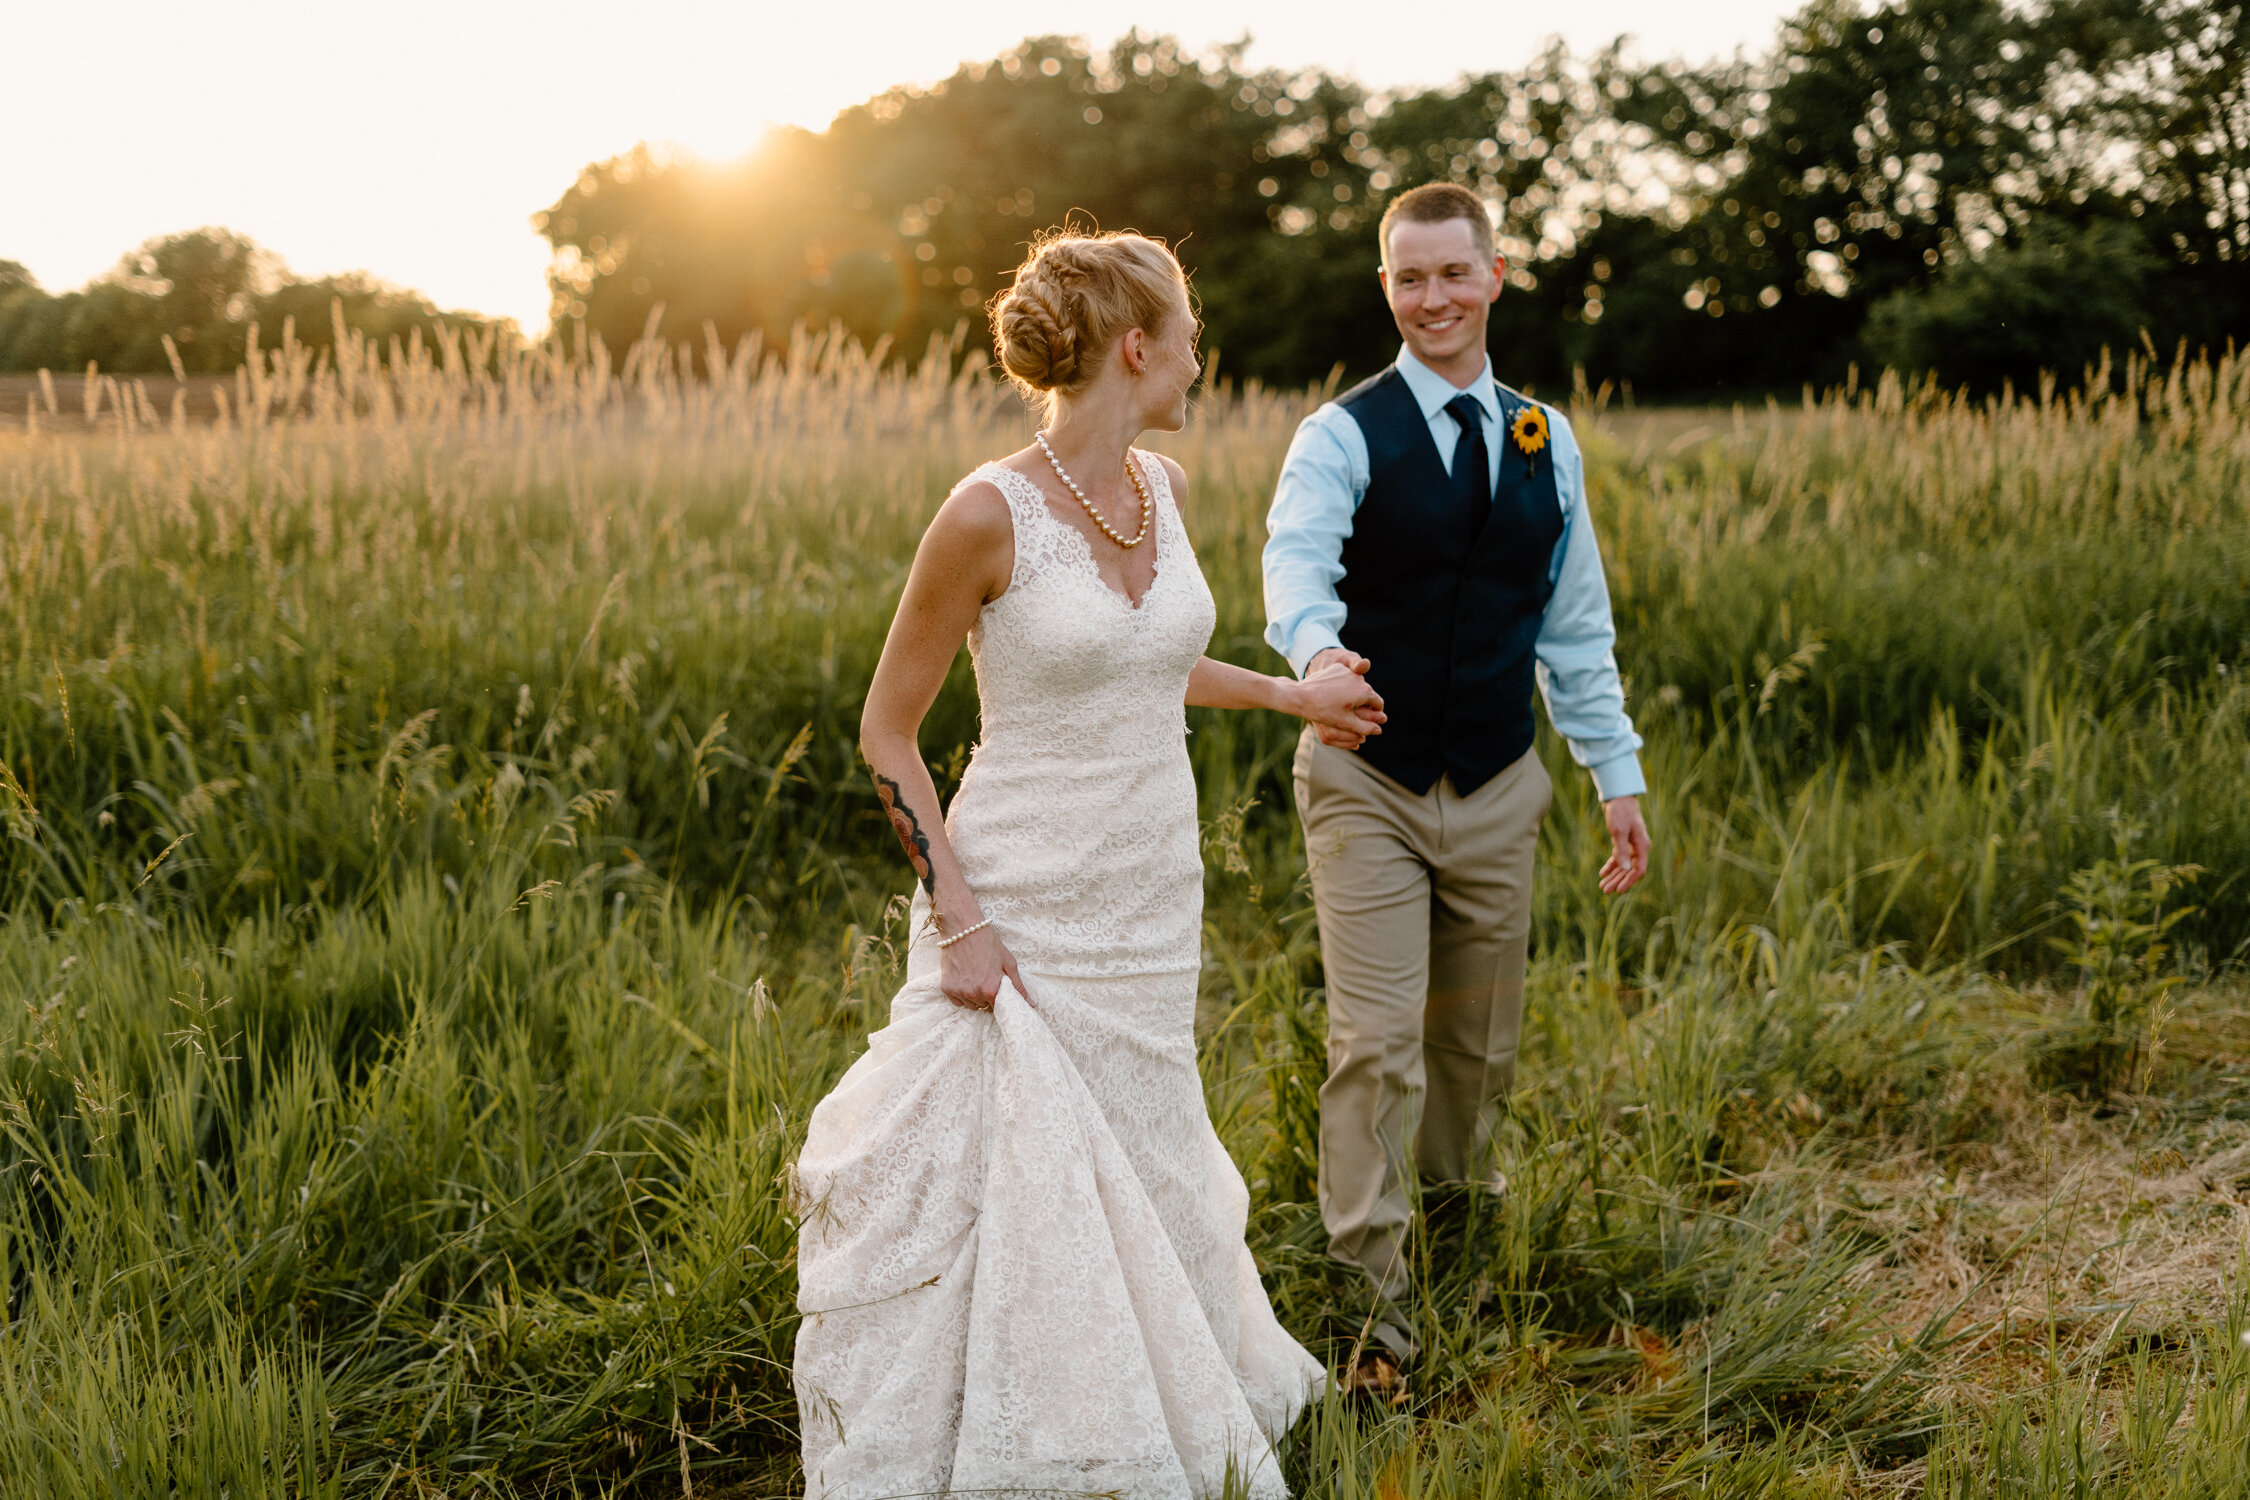 Leavenworth, Kansas Bride and Groom Newlywed Portraits by Kayli LaFon Photography | Intimate Travel Wedding & Elopement Photographer